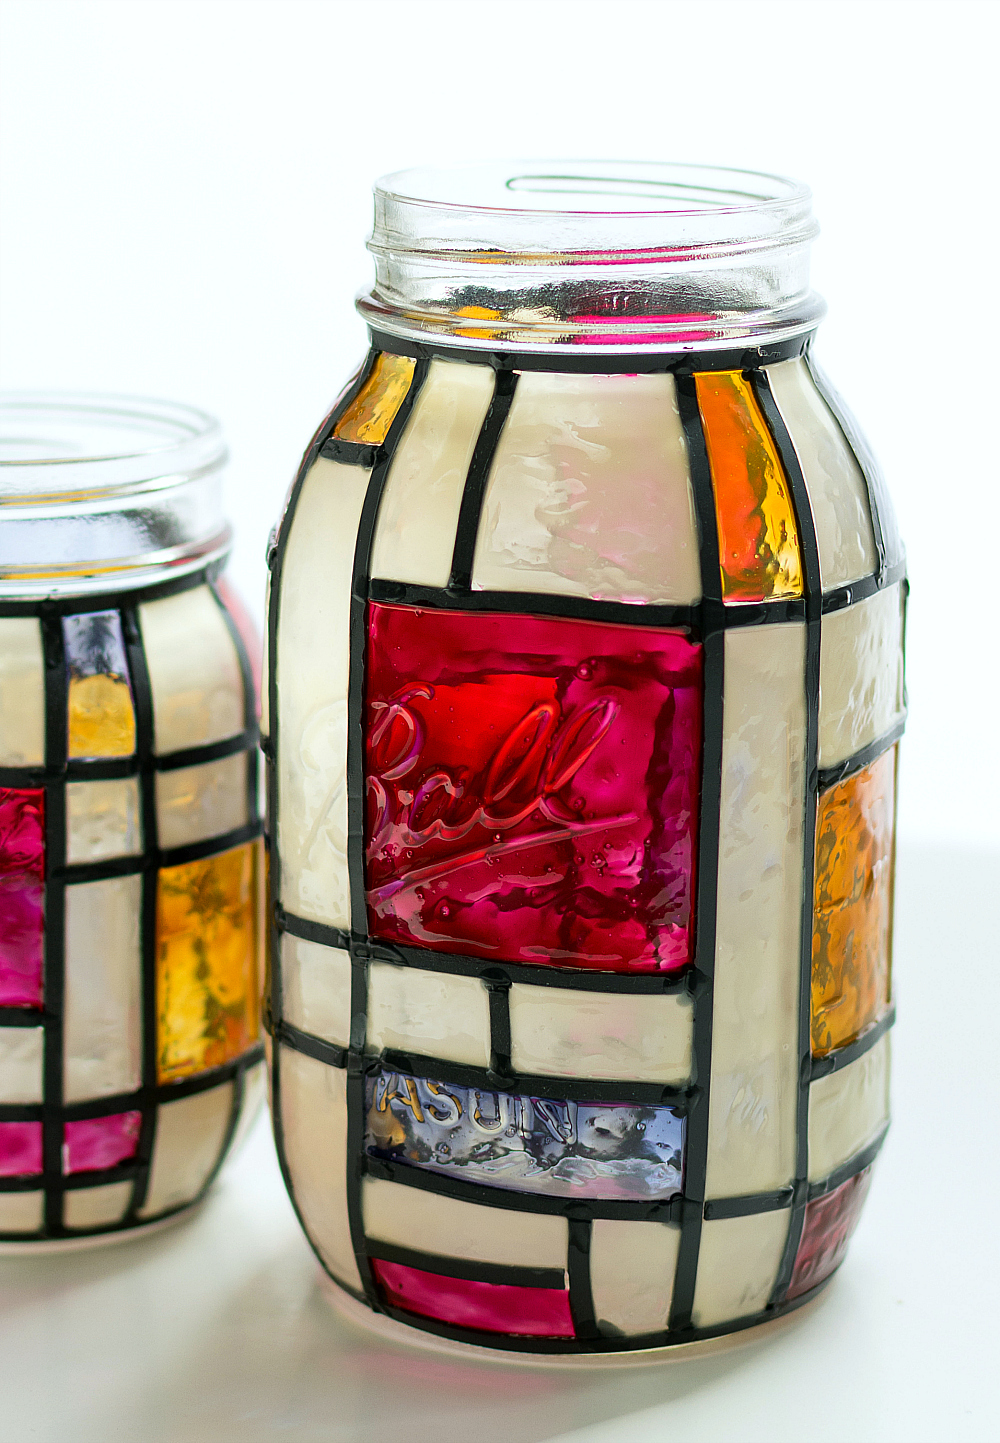 Mondrian Mason Jars - Mason Jar Crafts Love